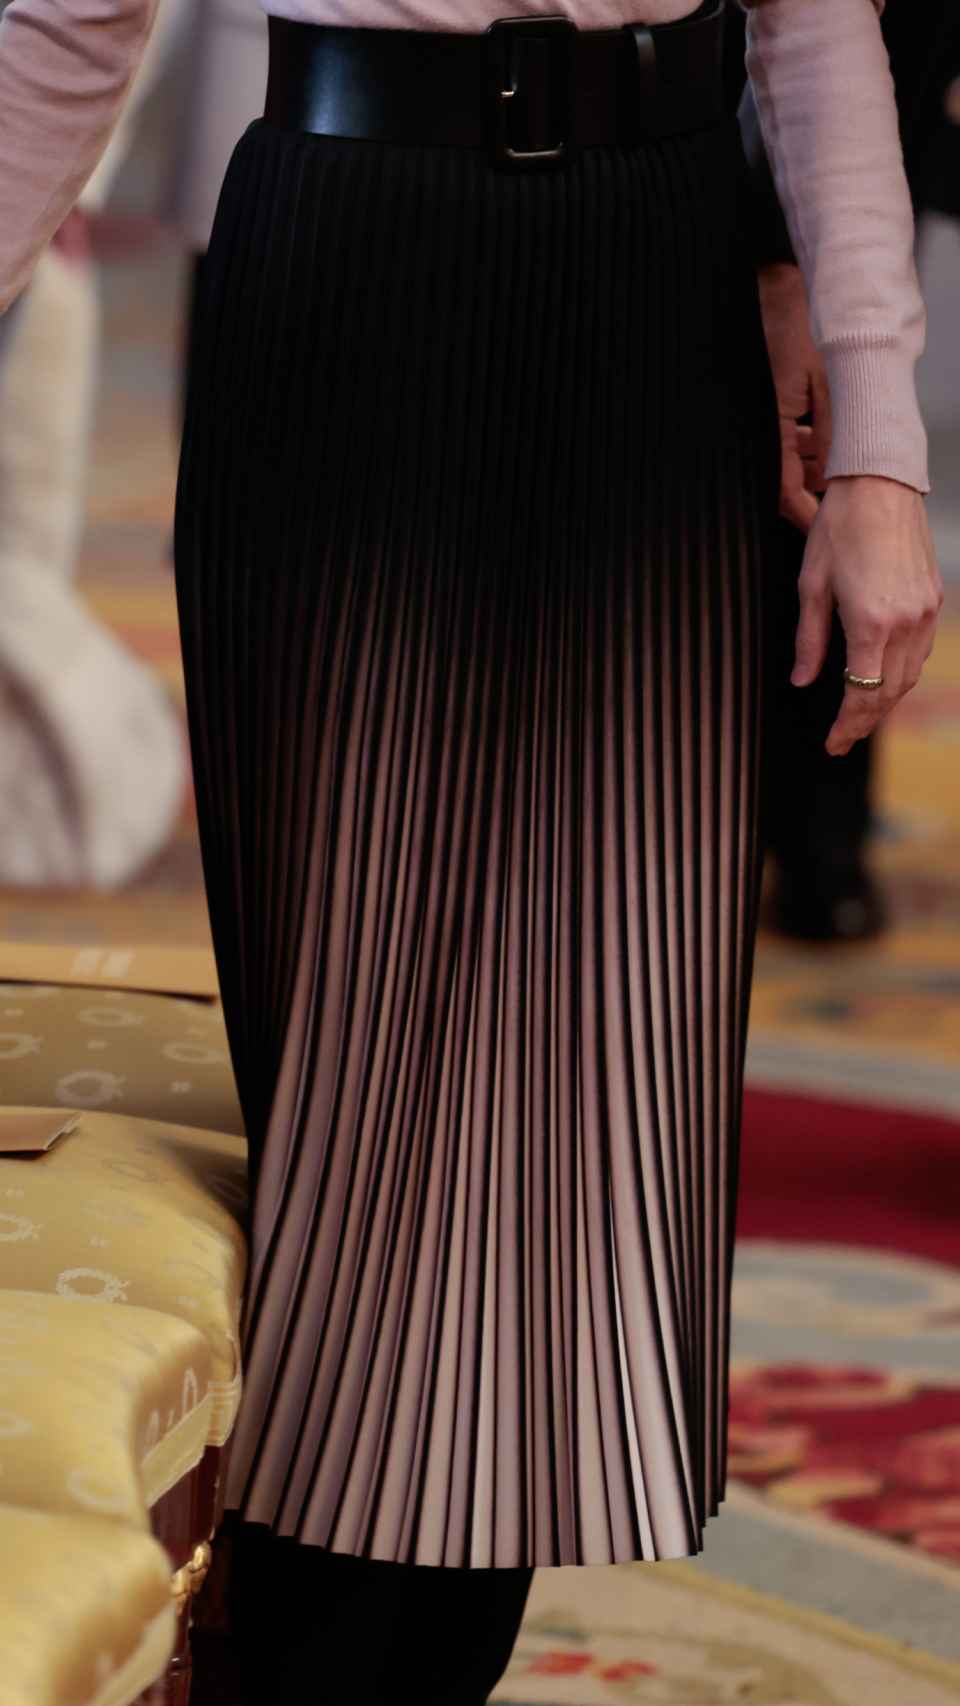 La falda plisada efecto fit de la Reina.